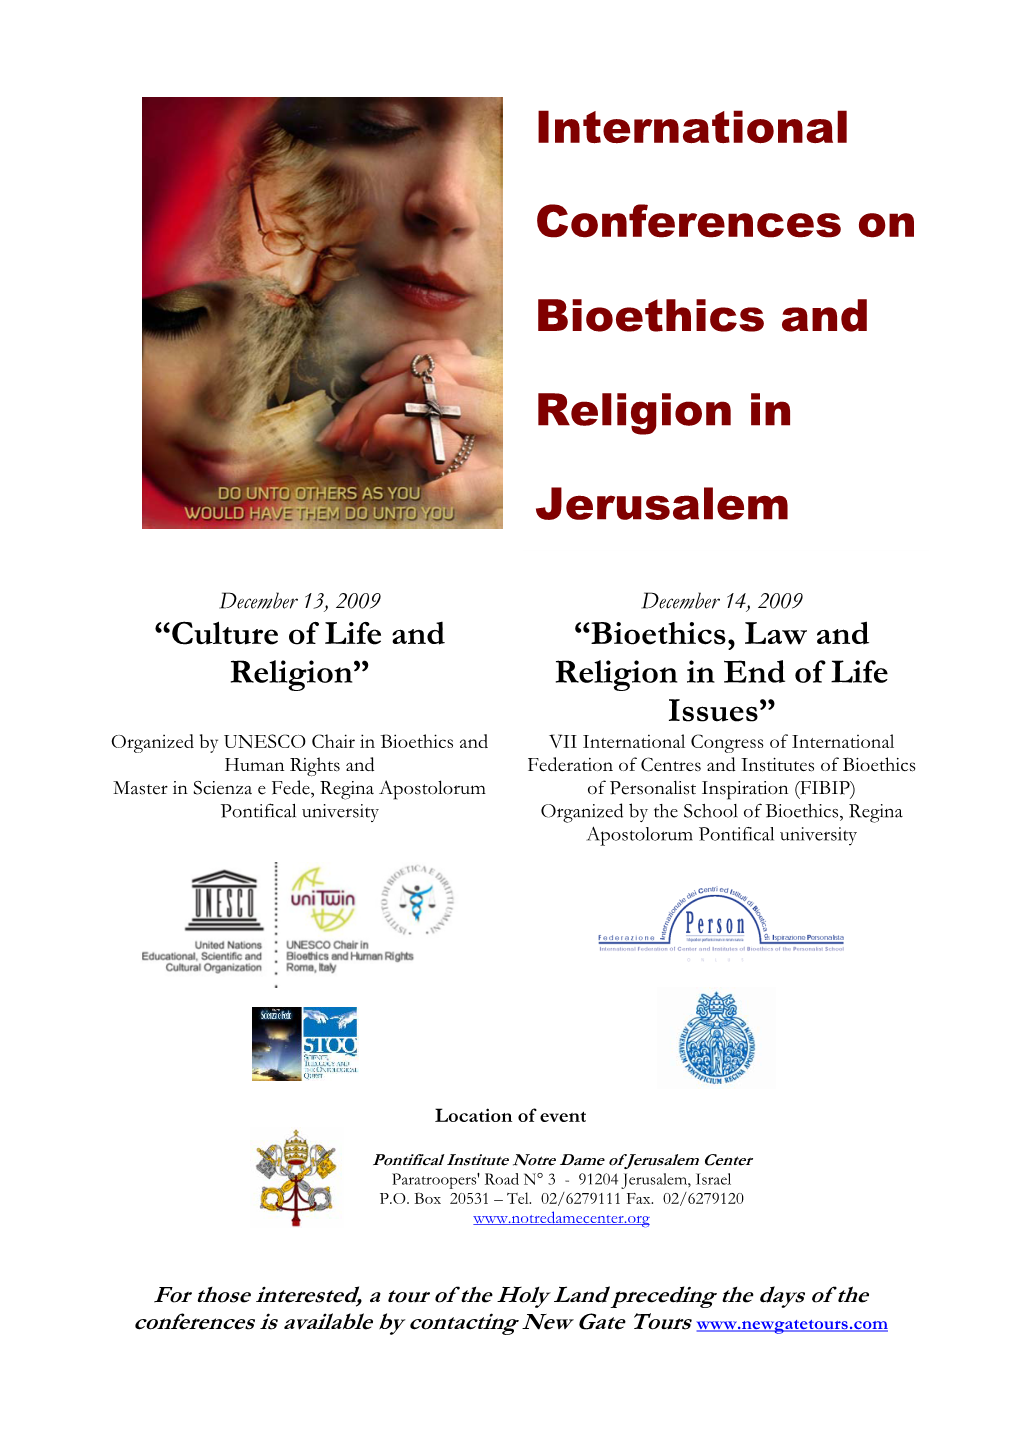 International Conferences on Bioethics and Religion in Jerusalem